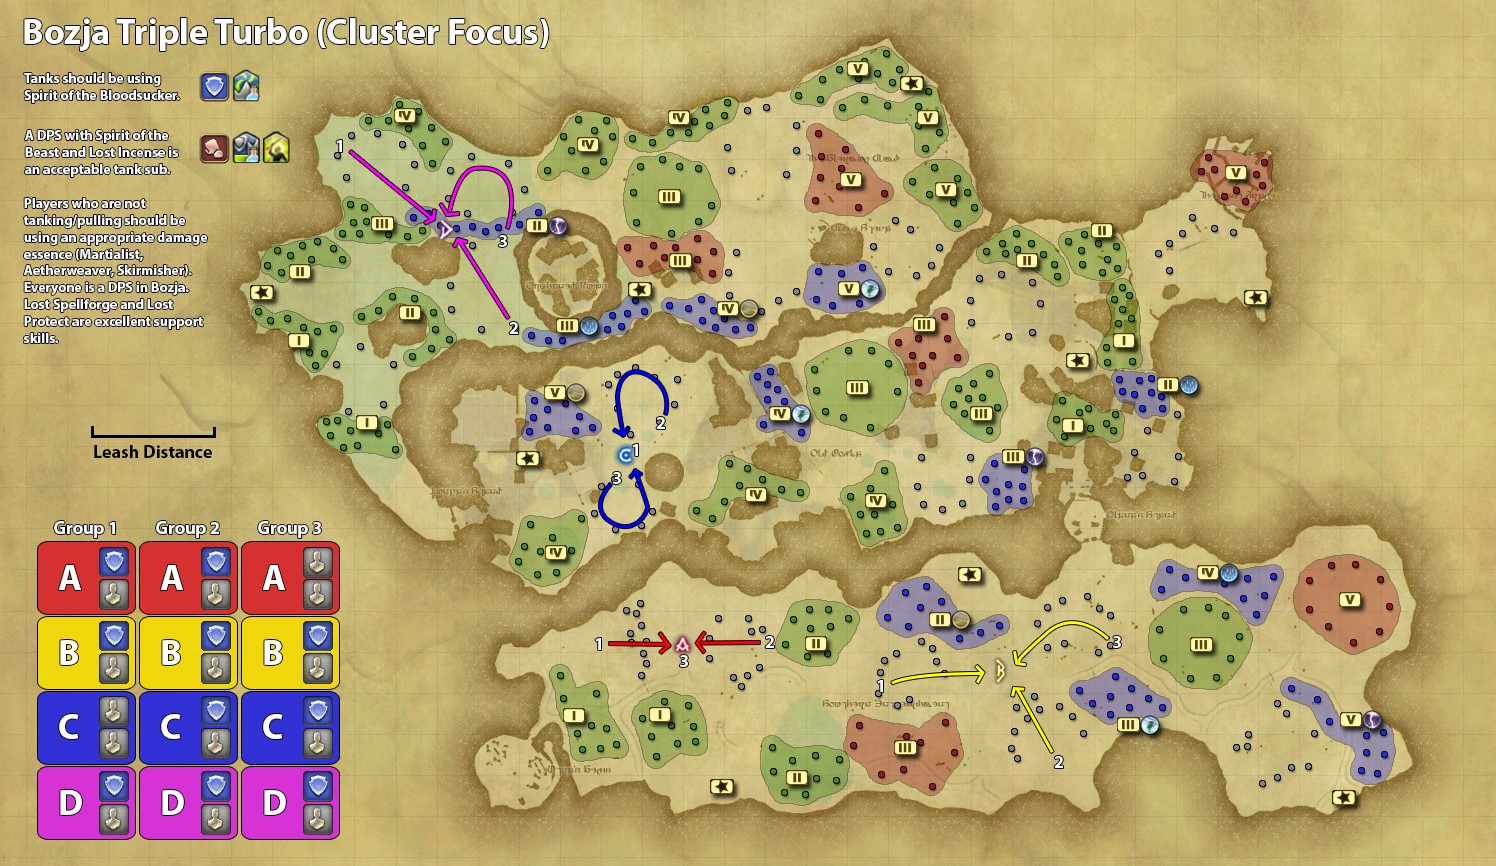 Bozja Cluster Farm Map